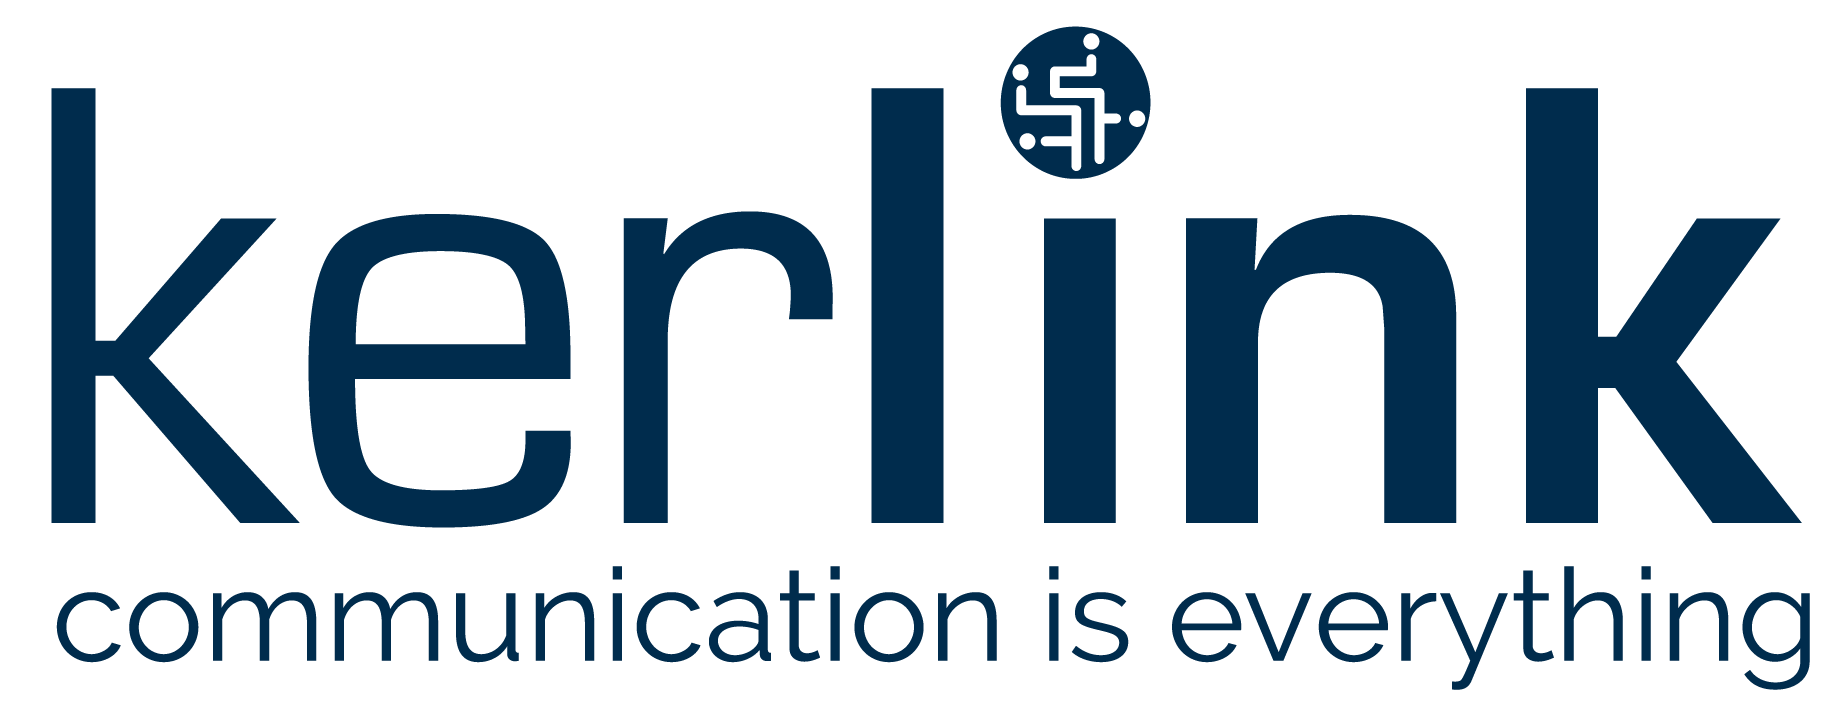 kerlink-logo